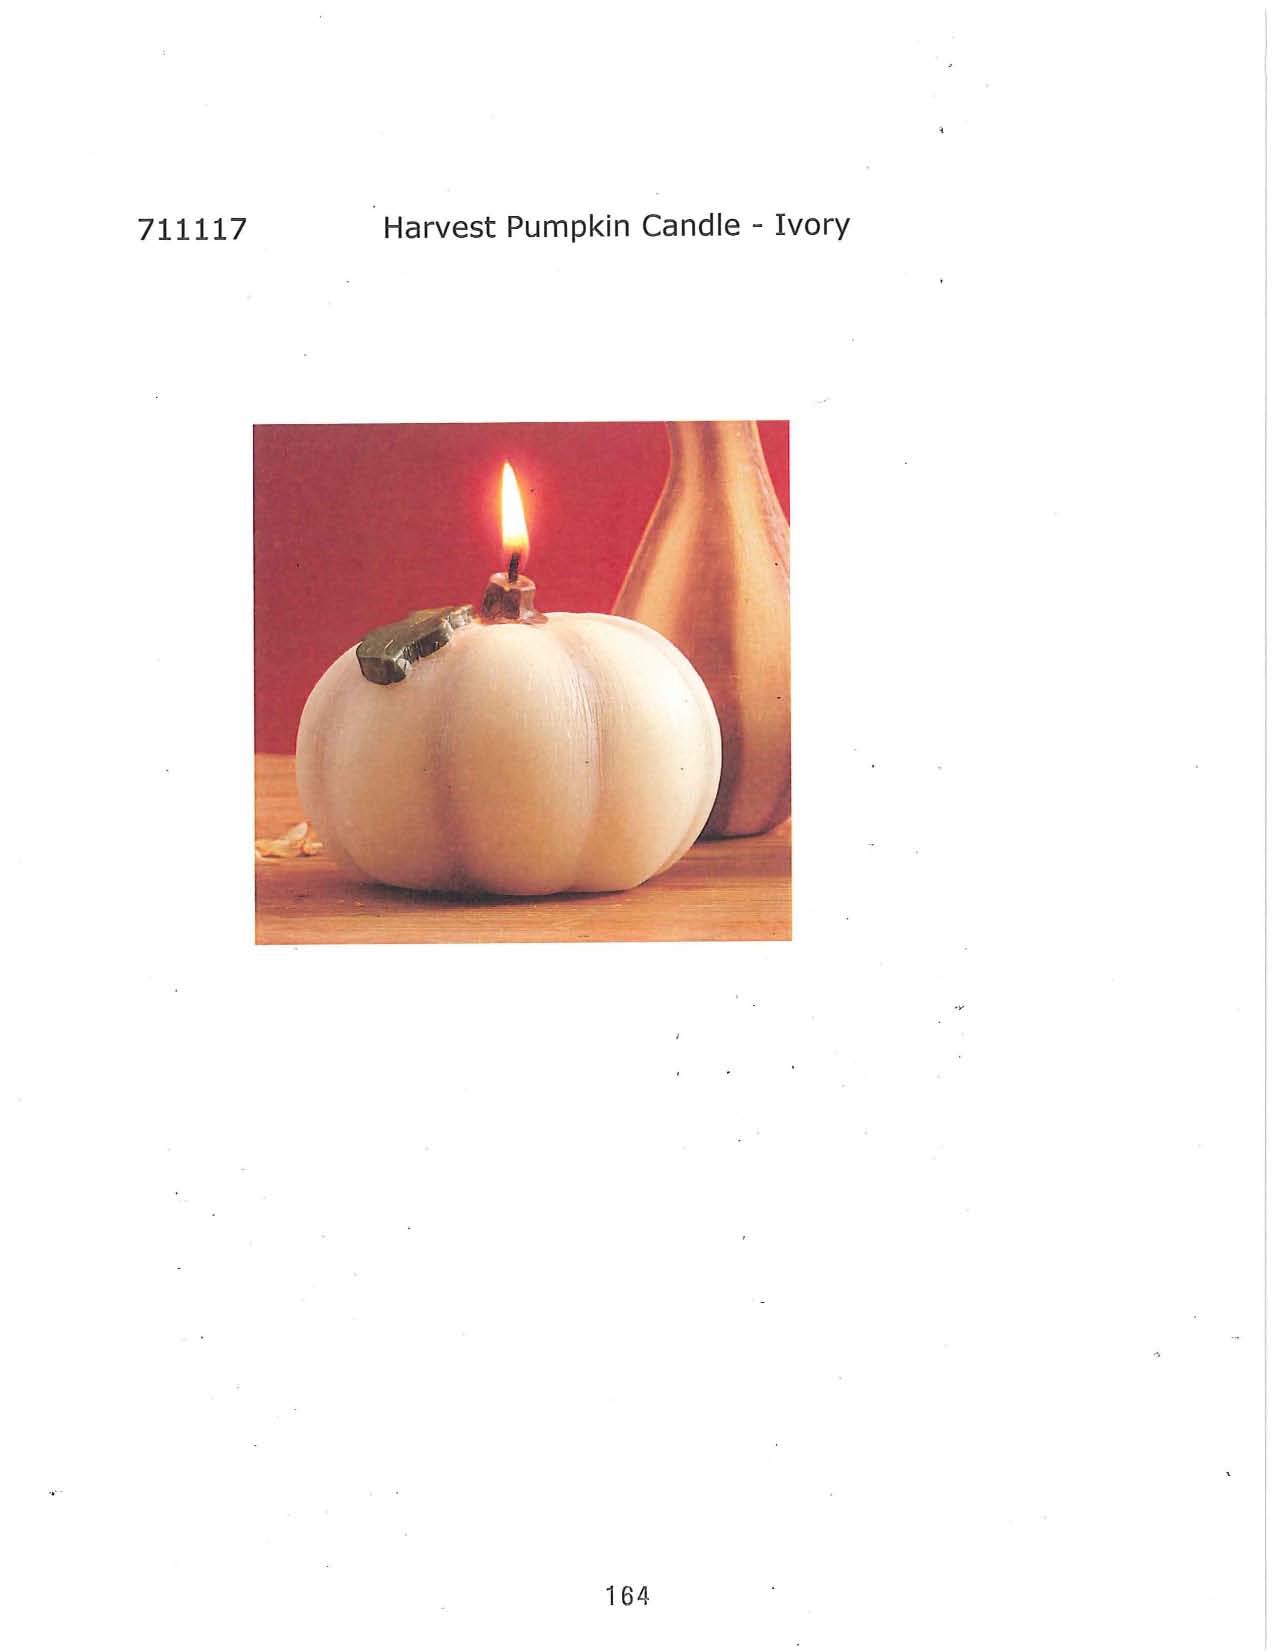 Harvest Pumpkin Candle - Ivory